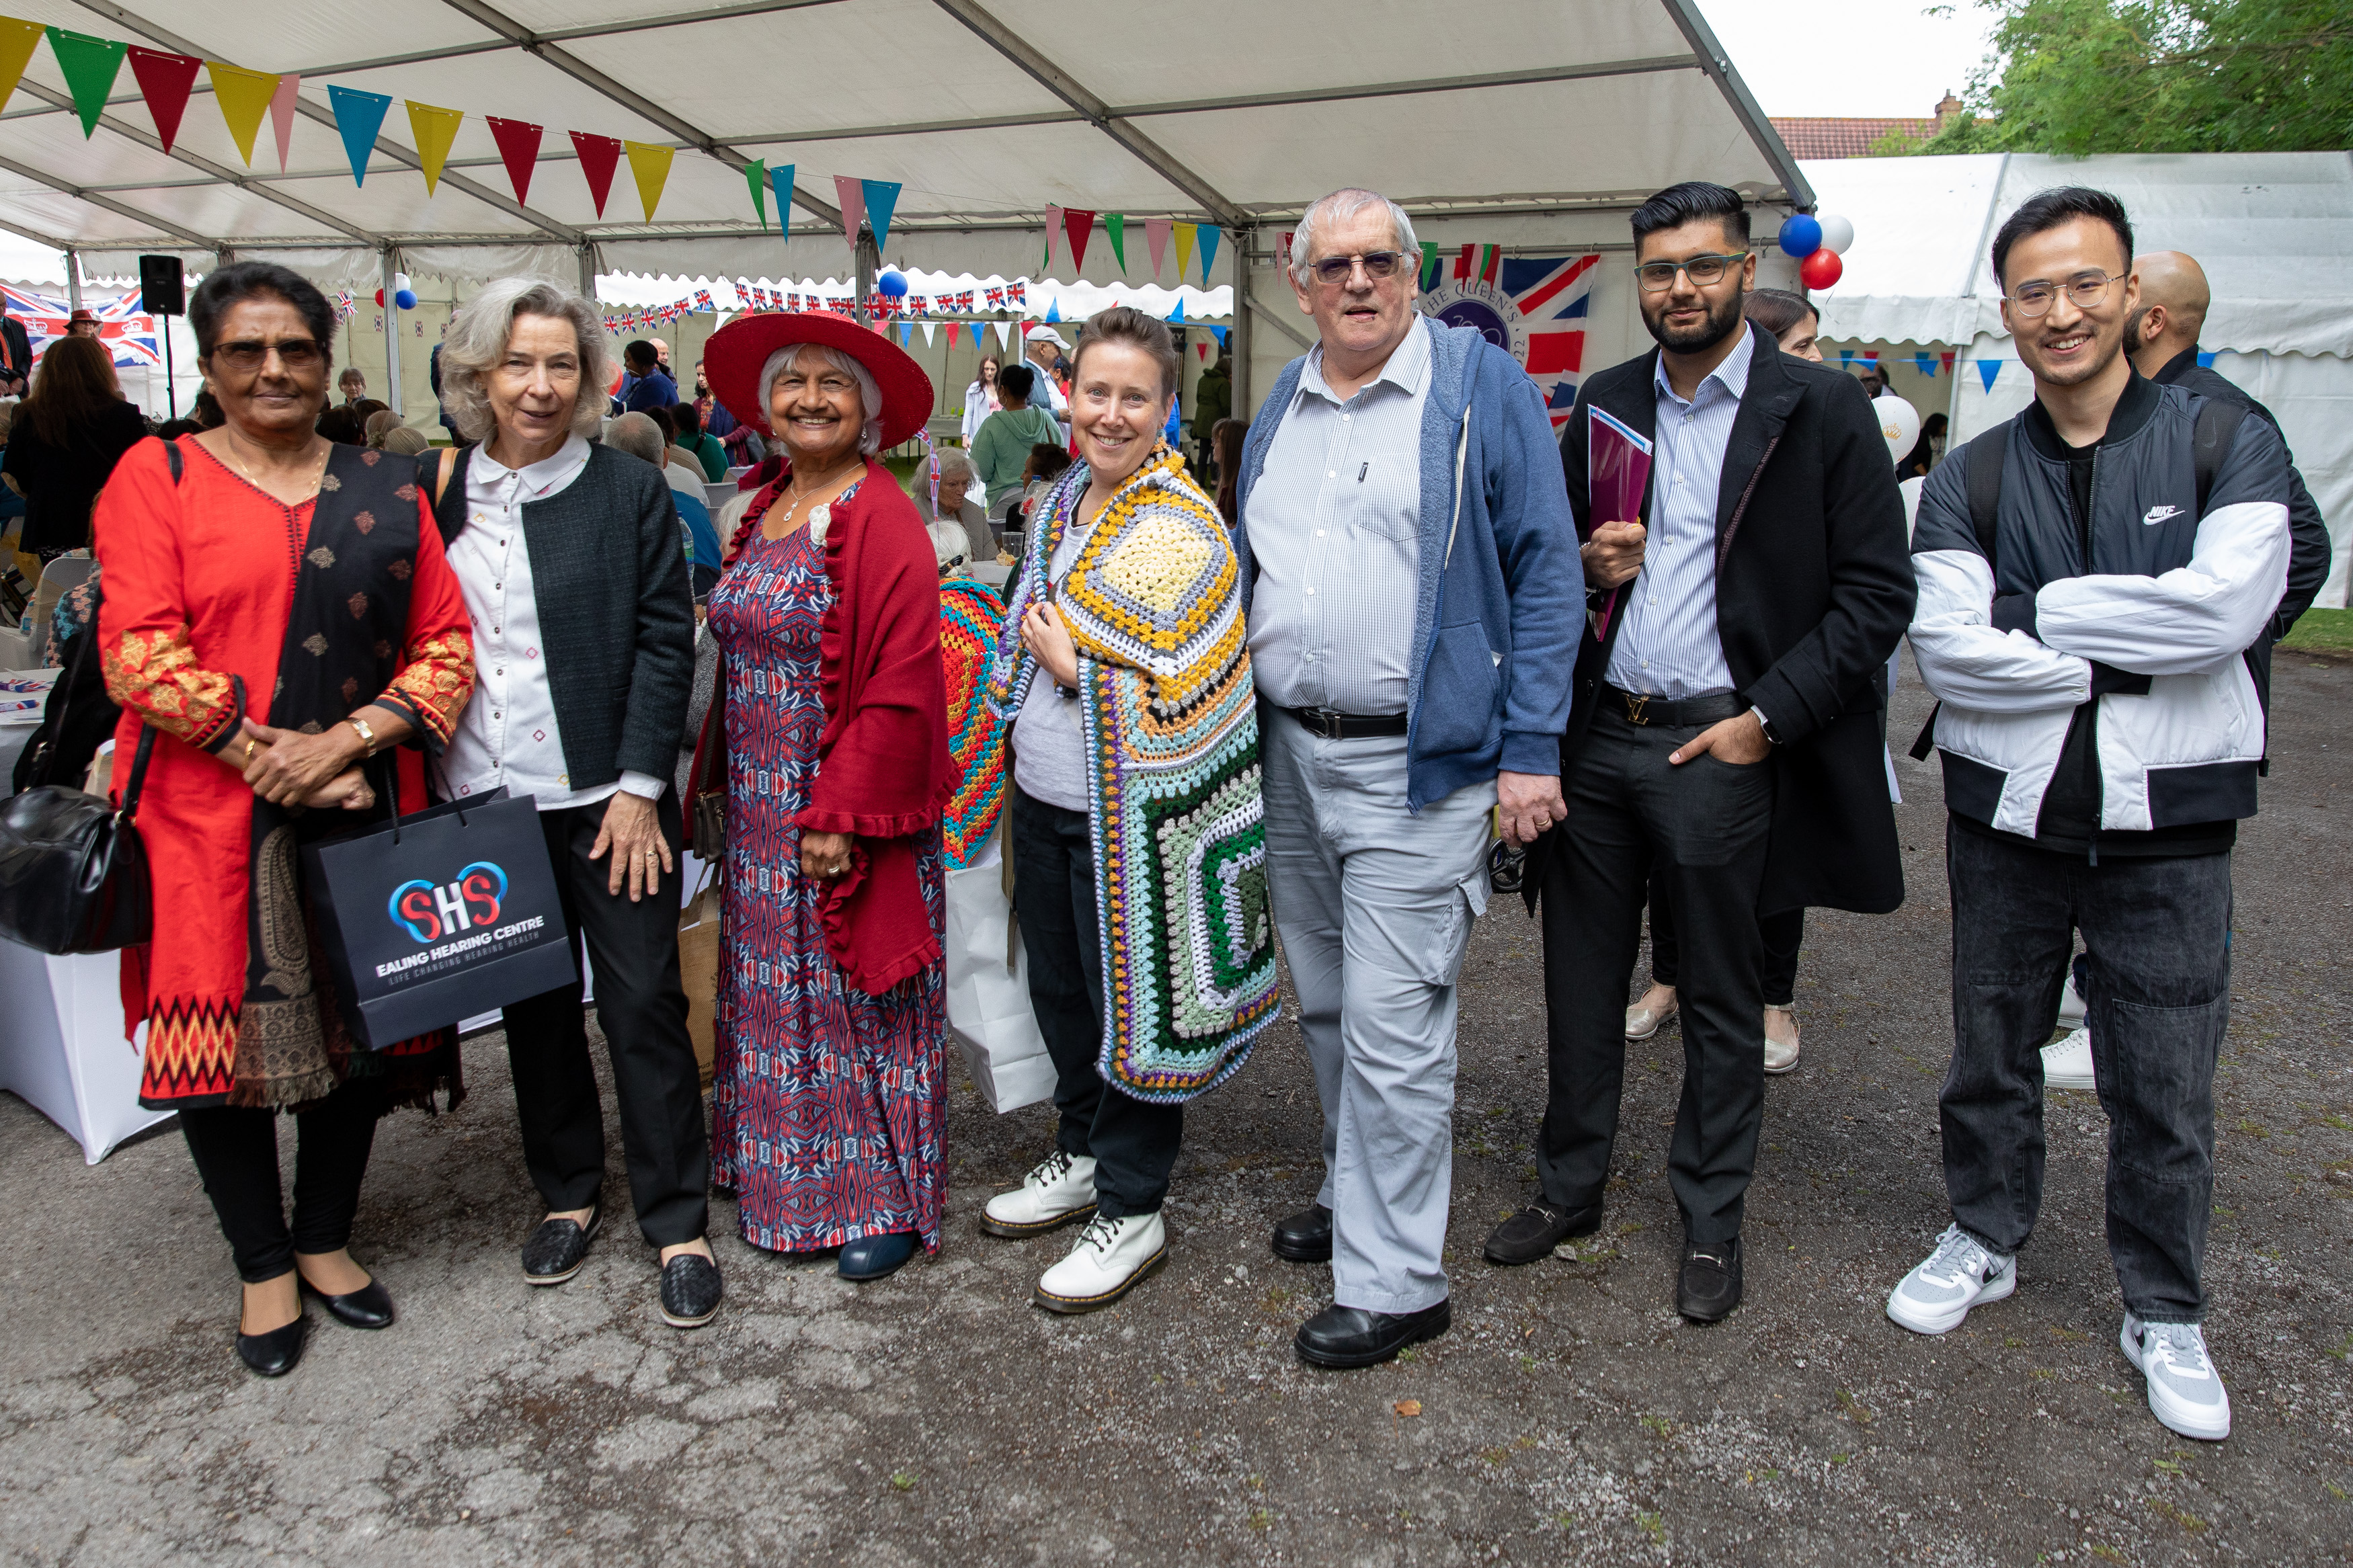 Guests at Age UK Ealing's Platinum Jubilee celebration